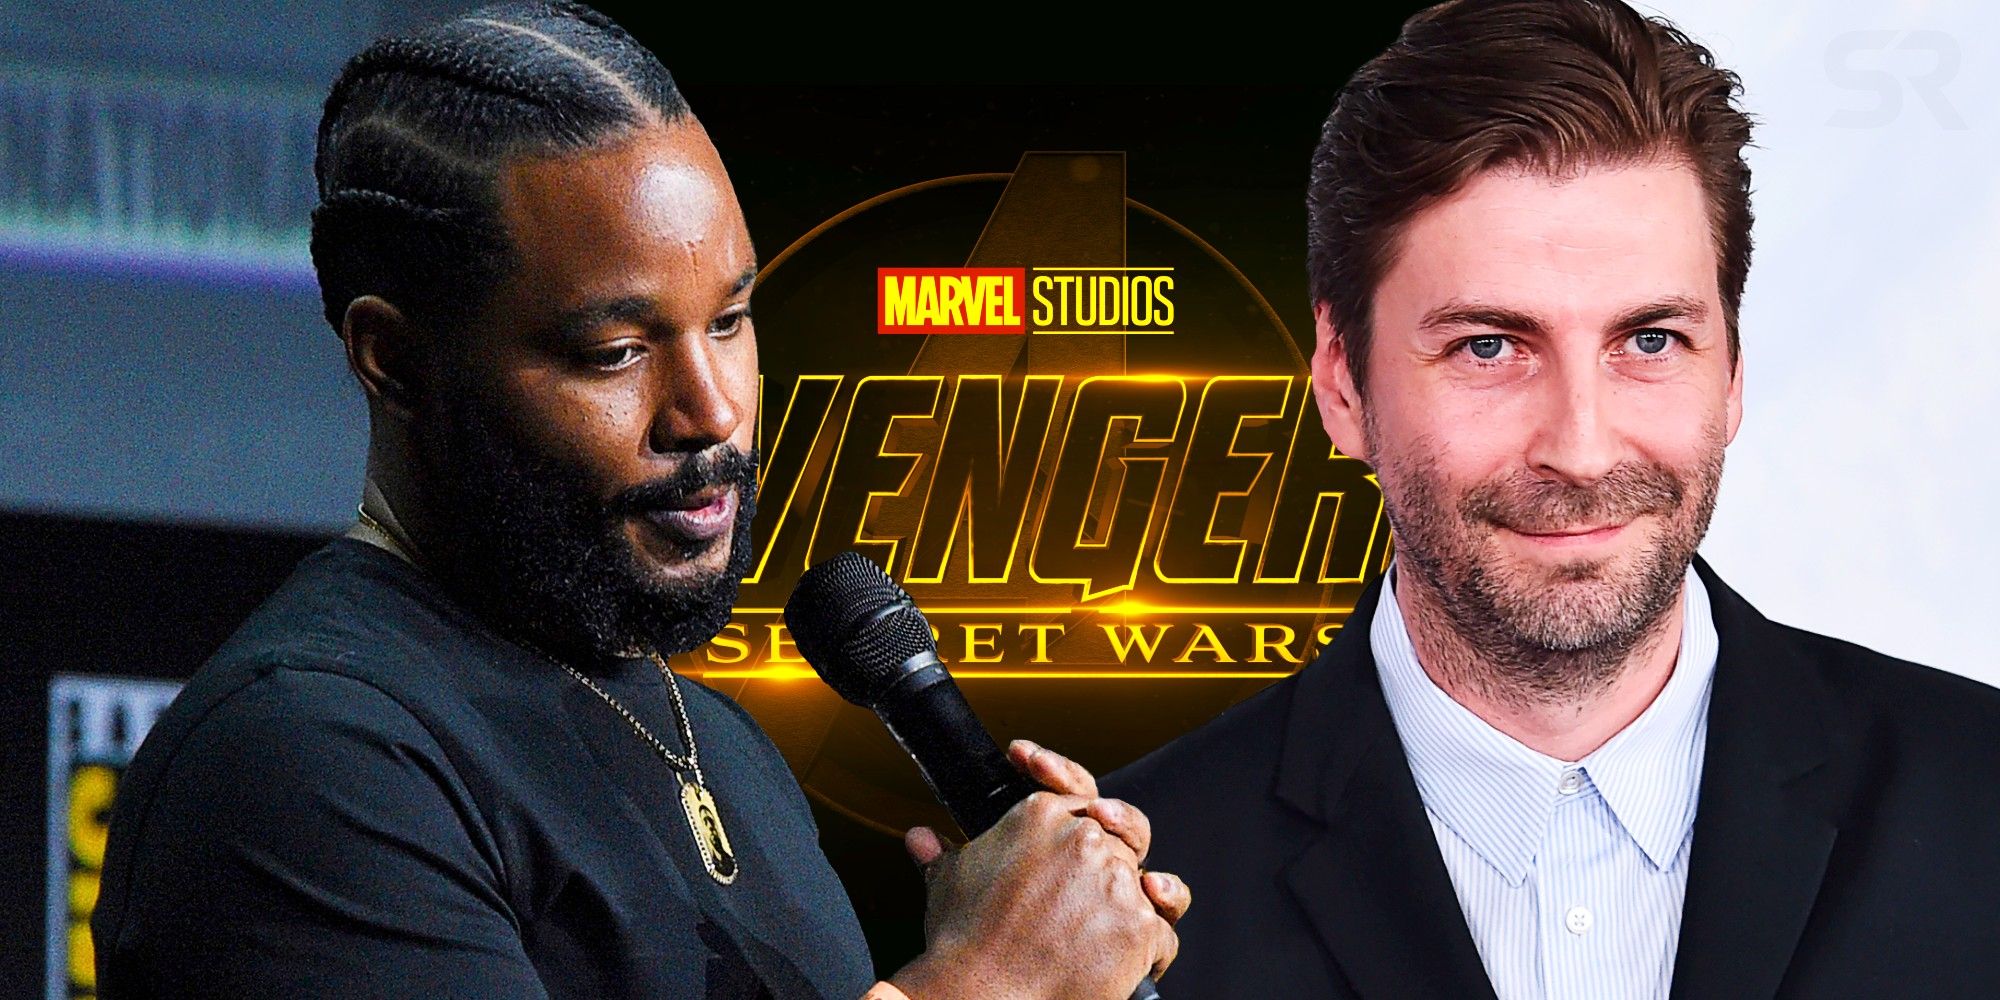 Potential Directors of 'Avengers: Secret Wars